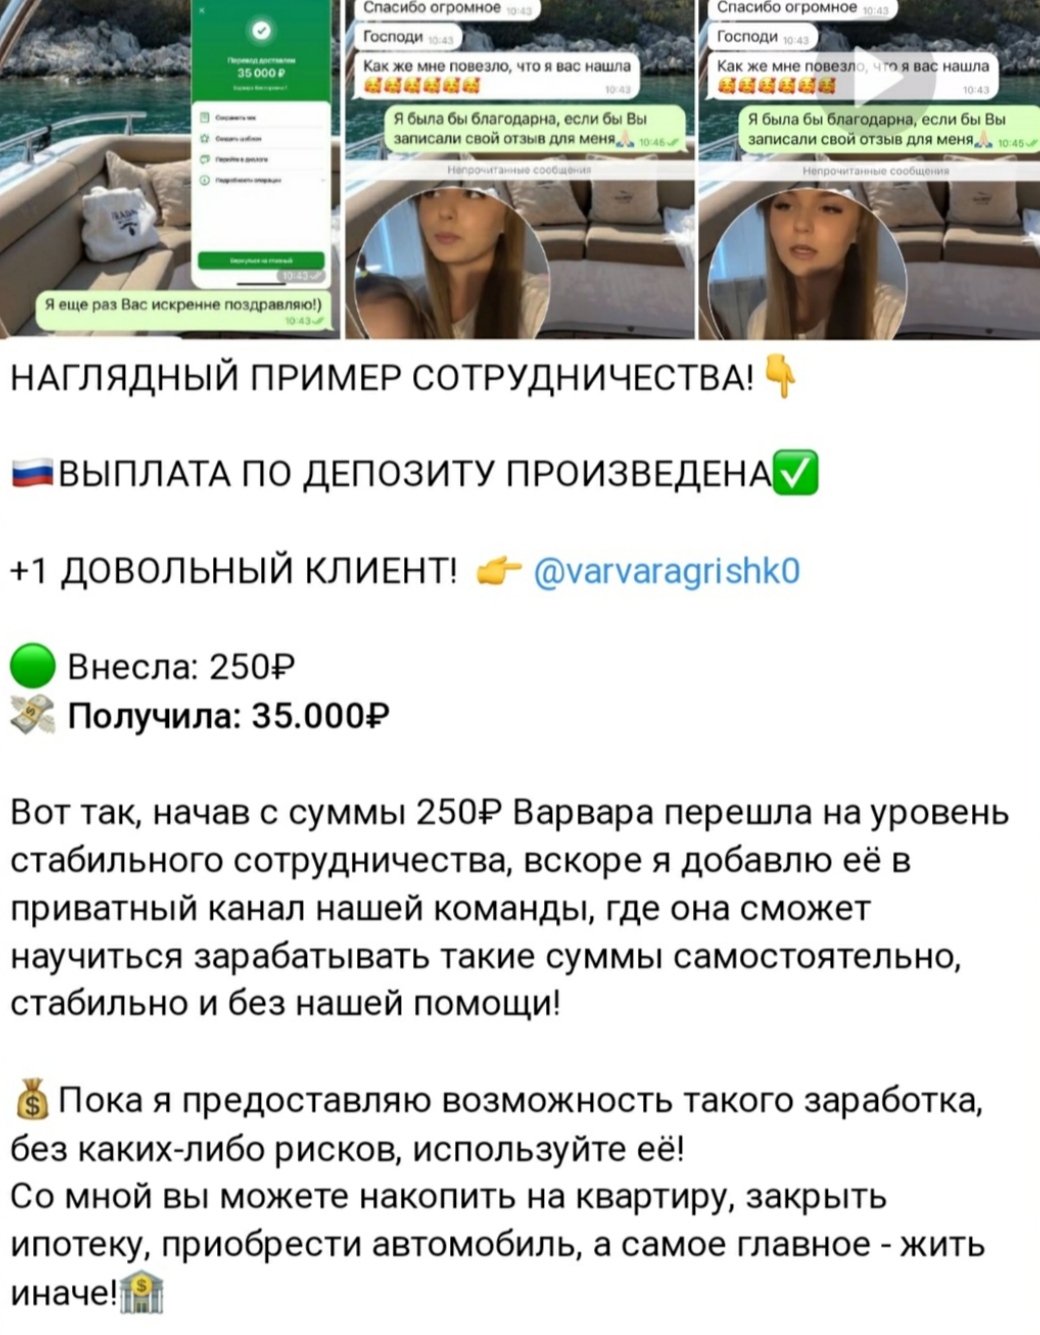 Дарья Милина телеграм пост